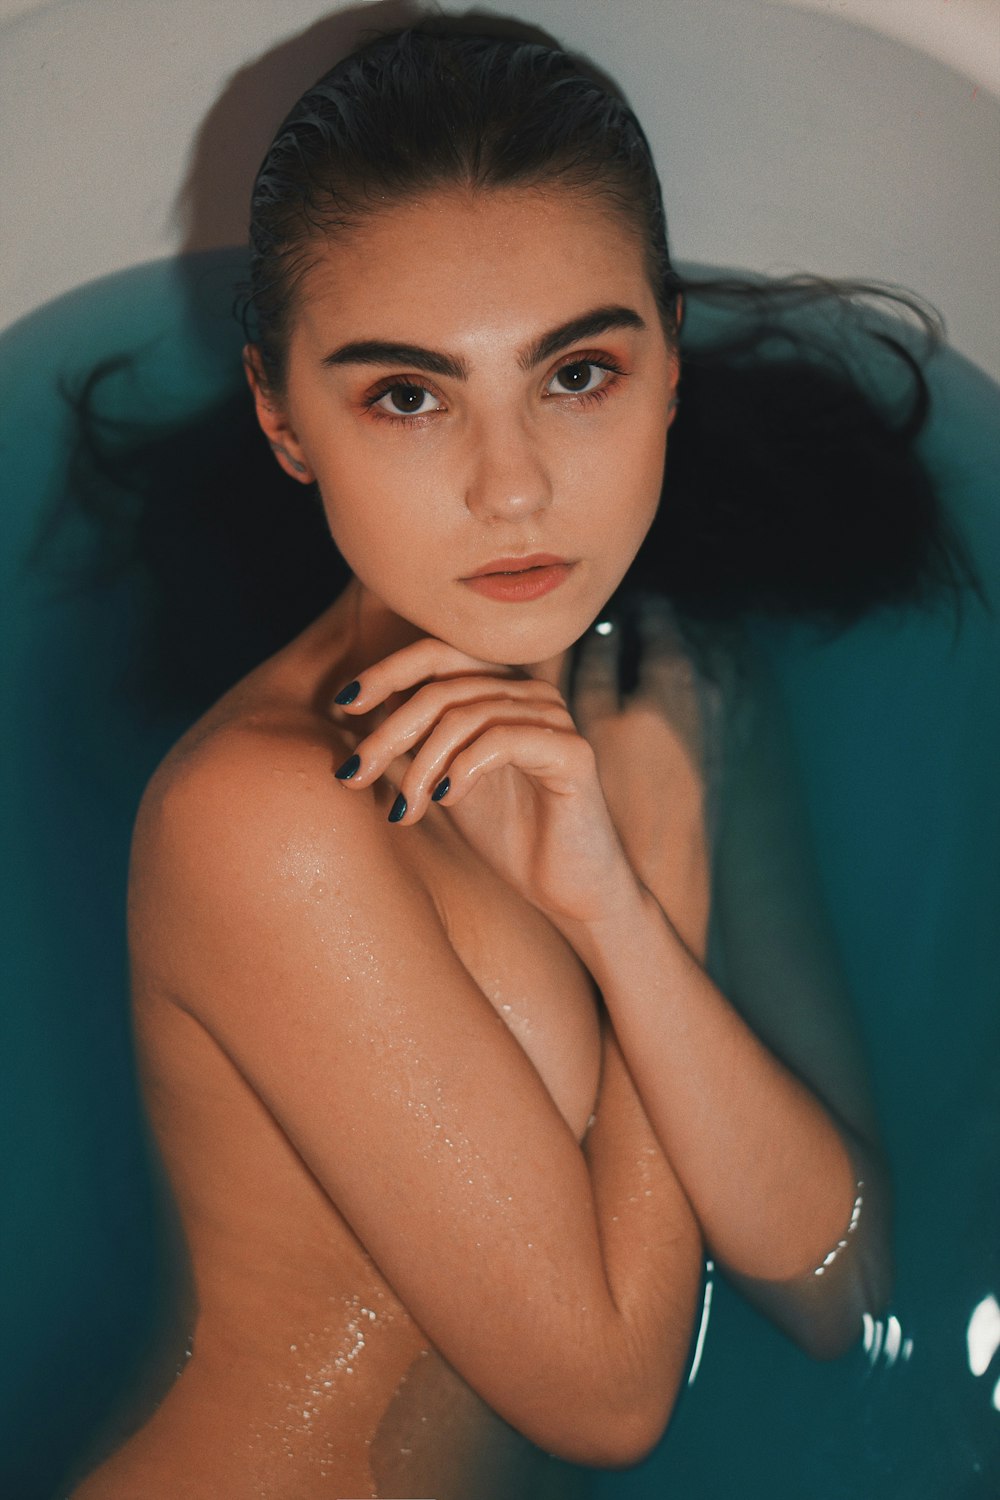 Halbnackte Frau auf Badewanne